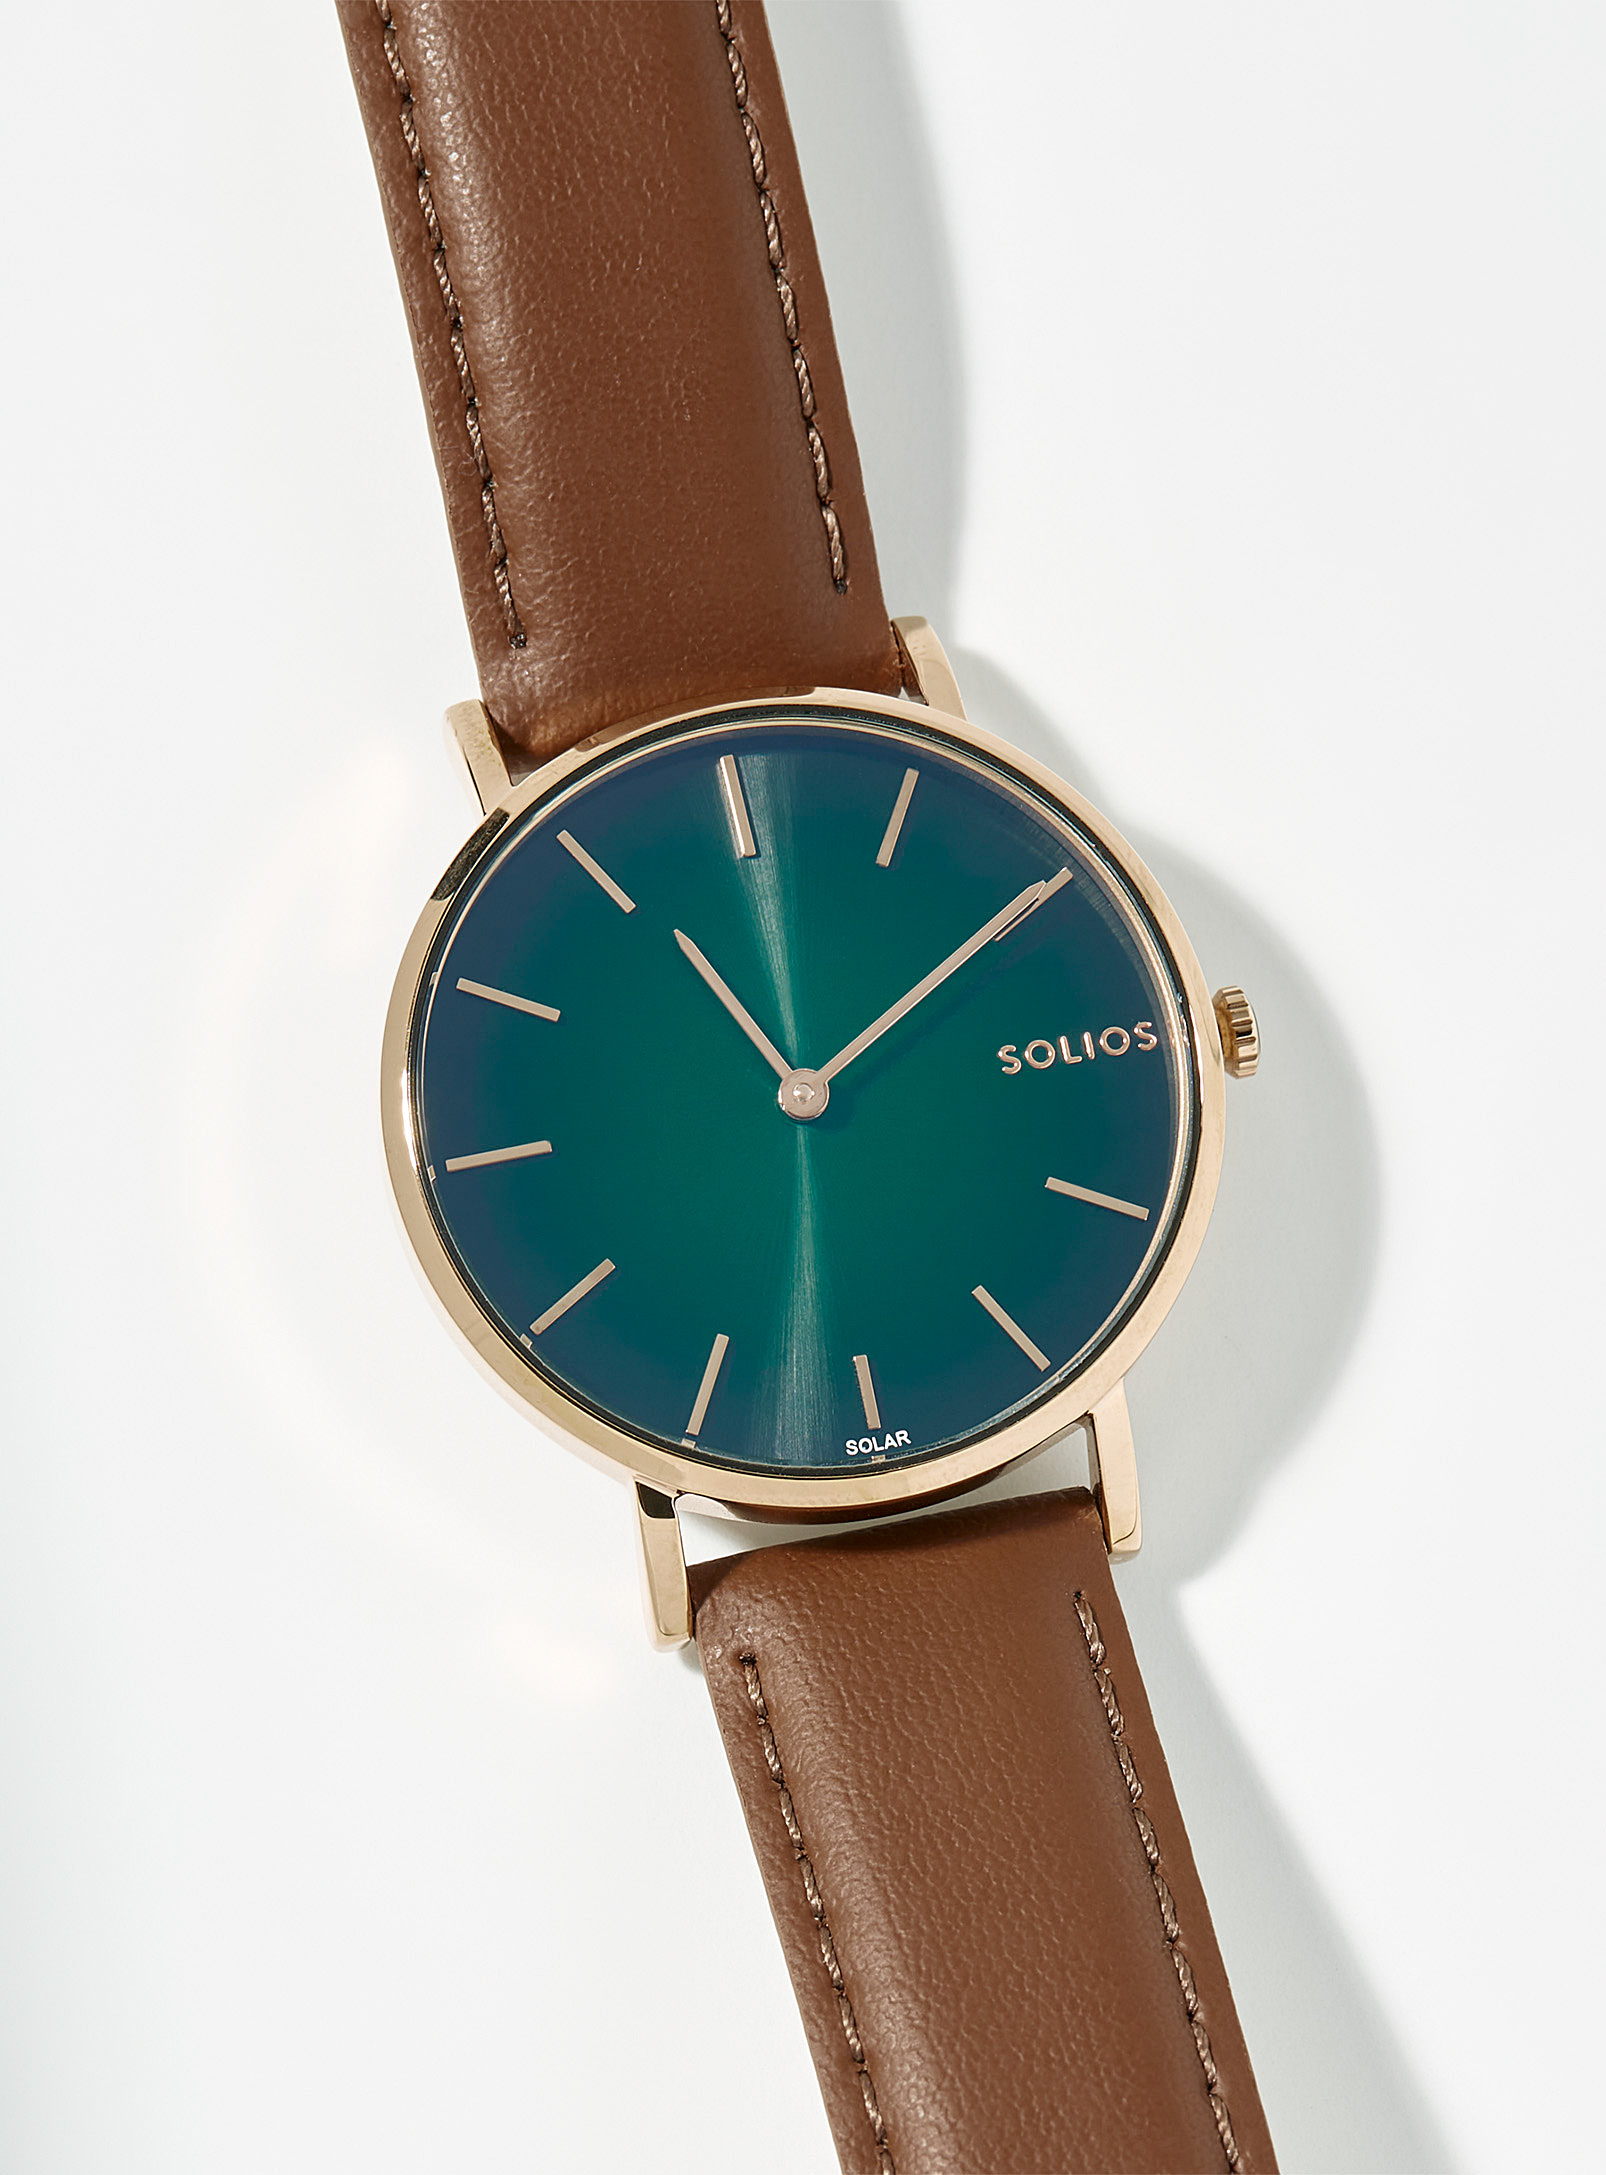 Solios - Men's Graded face Rainforest watch